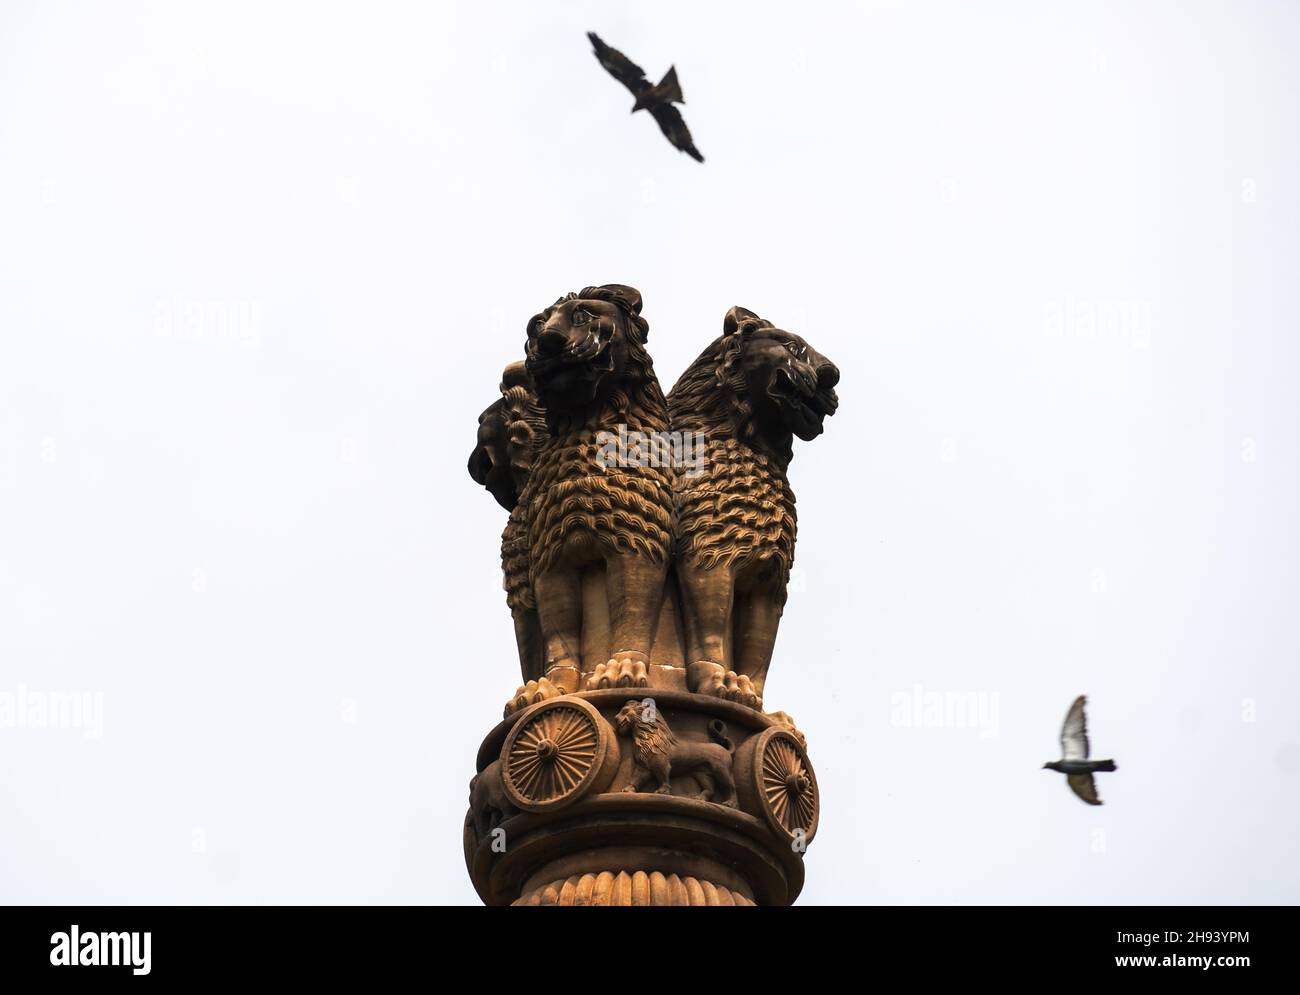 Ashoka Pillar image in sky with birds are flying Stock Photo